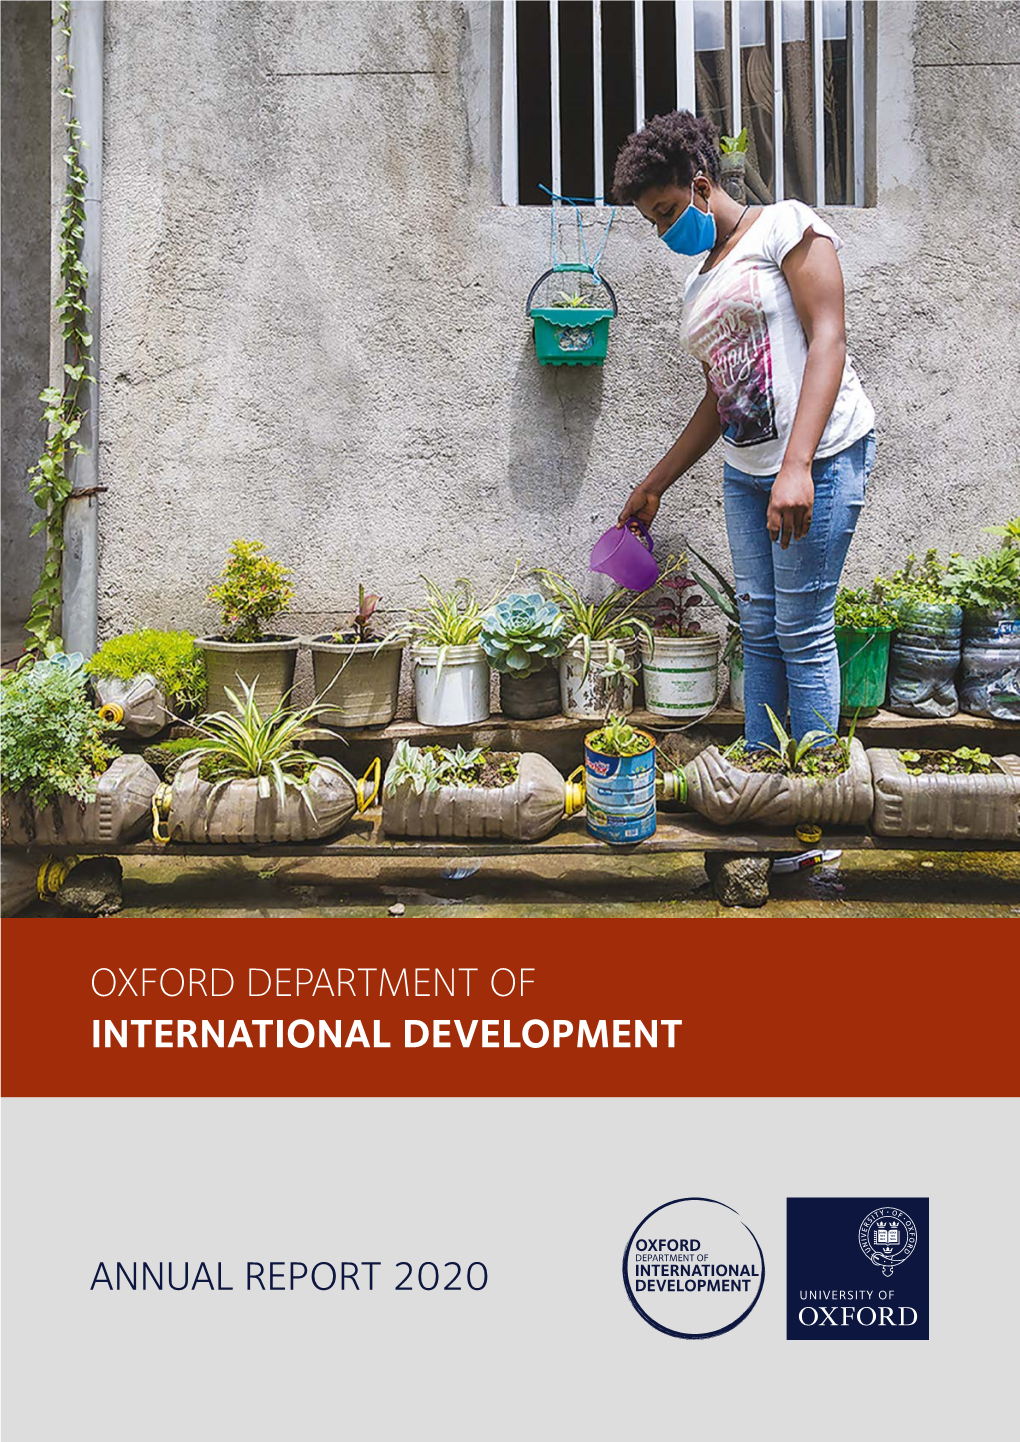 Oxford Department of International Development Annual Report 2020